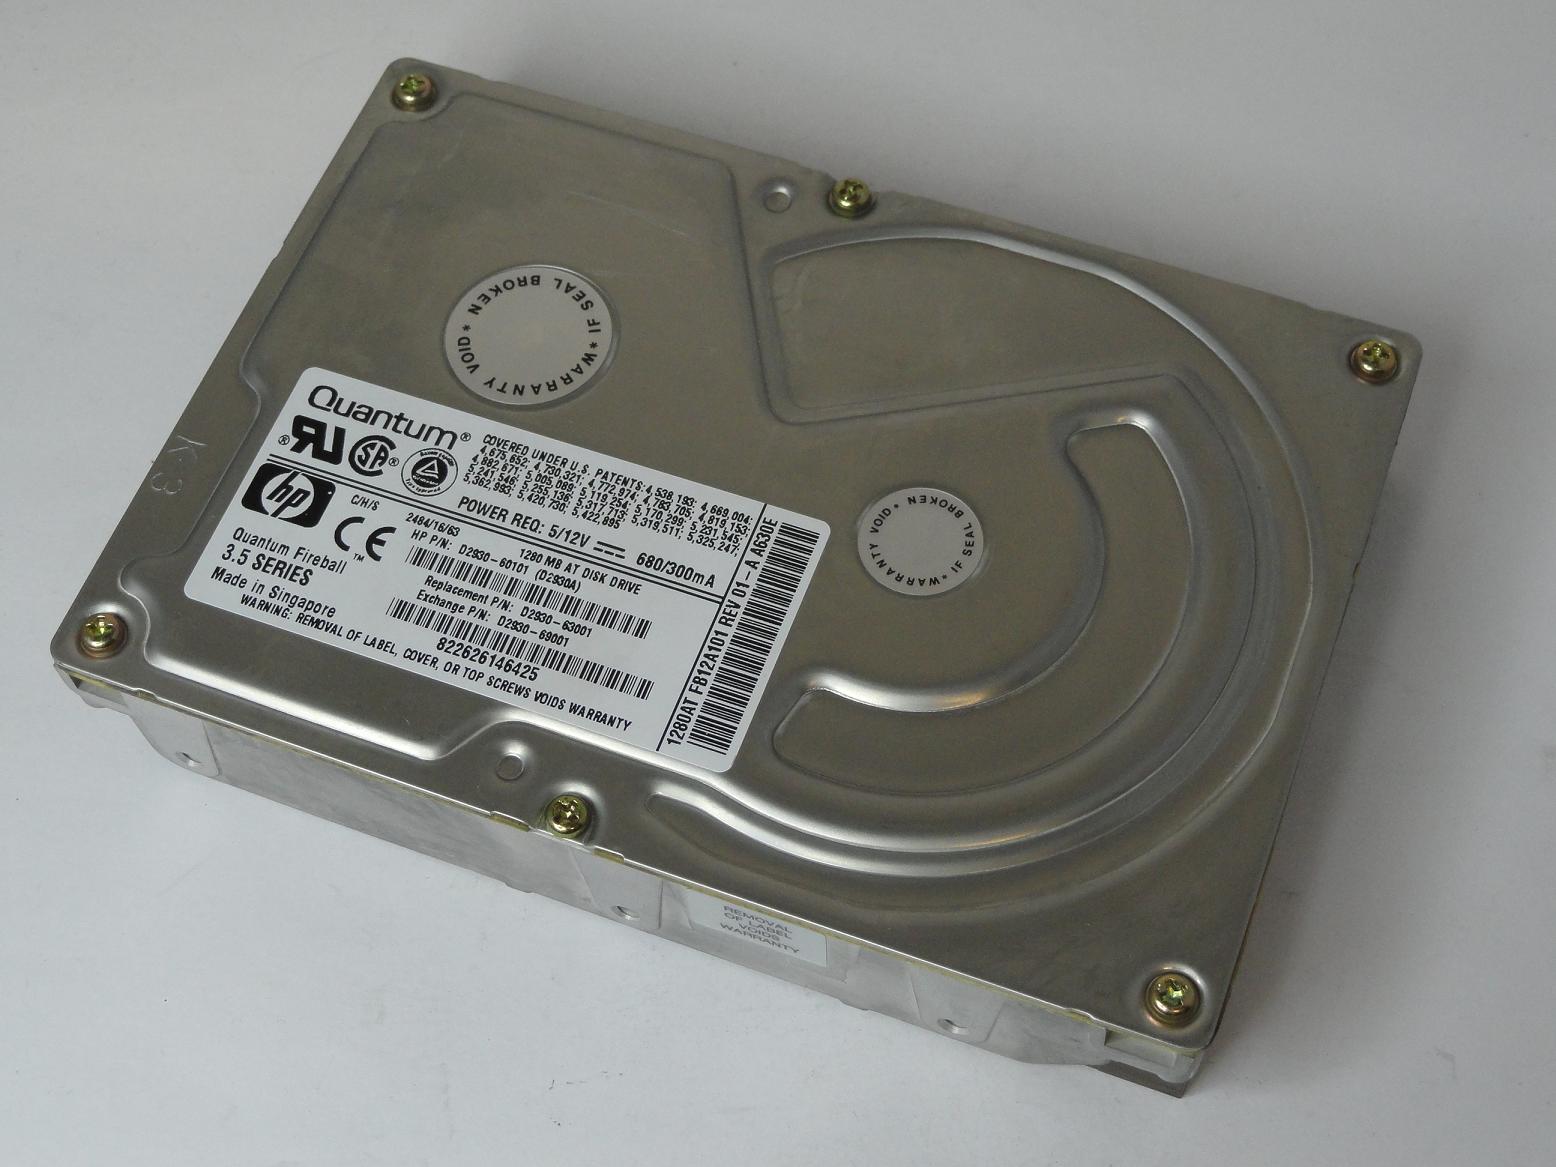 FB12A101 - Quantum HP 1.2GB IDE 5400Rrpm 3.5in Fireball 3.5 Series HDD - Refurbished